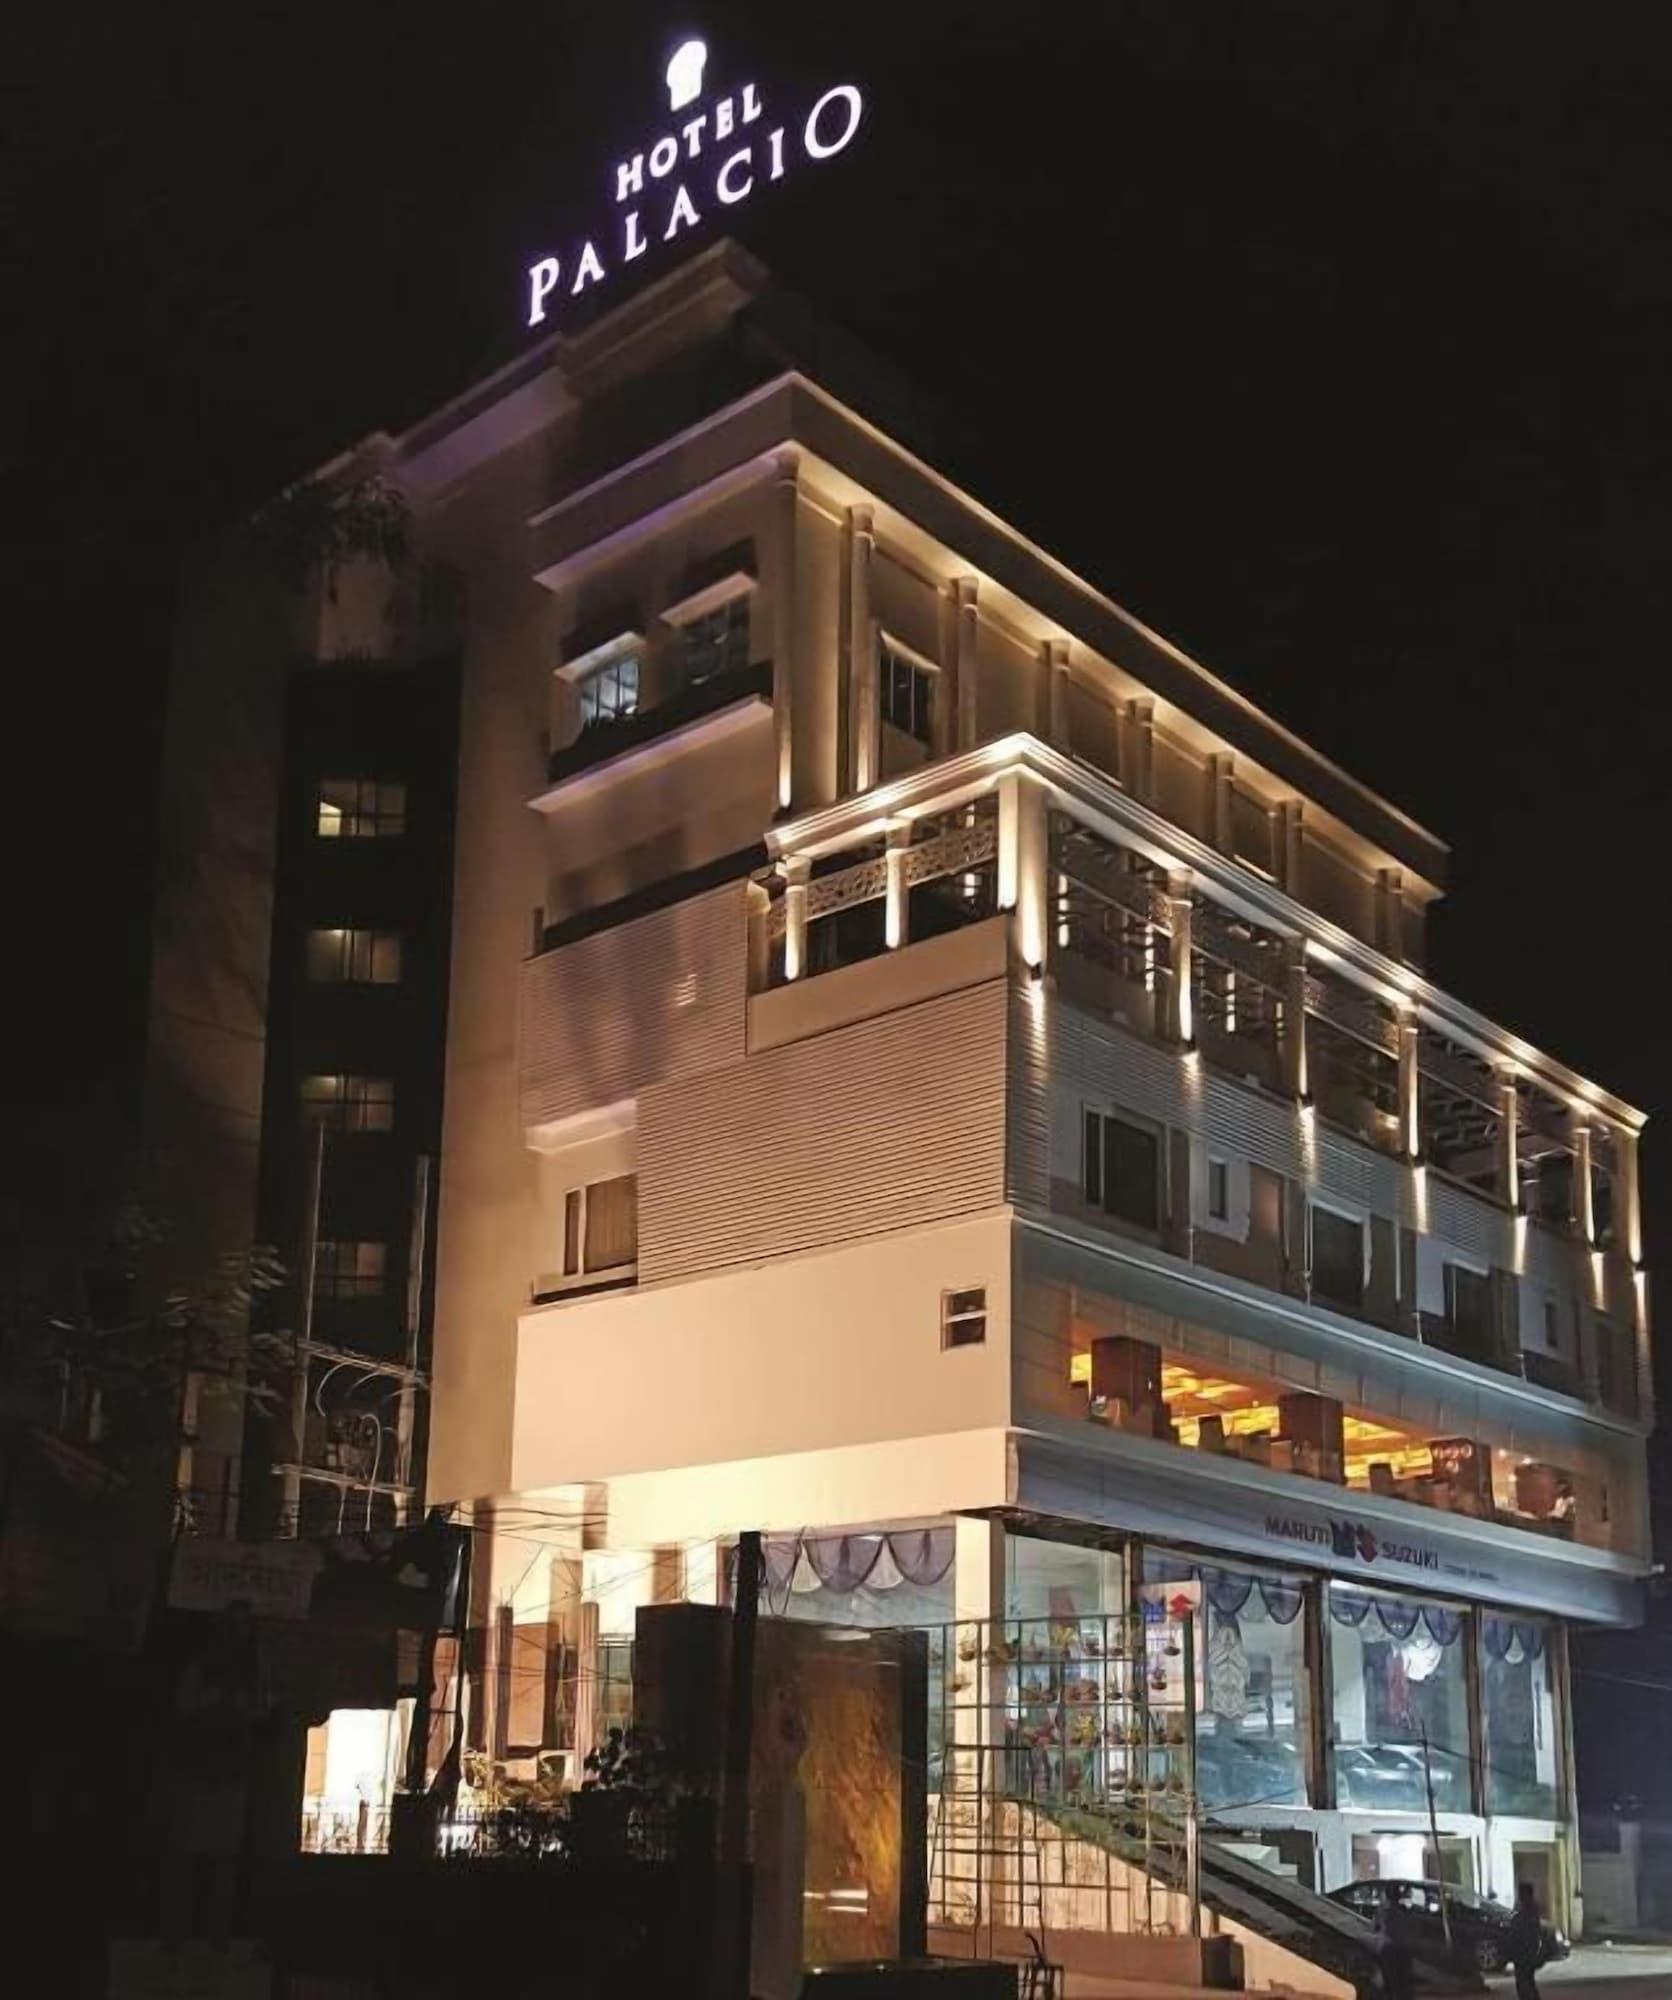 The Hotel Palacio image